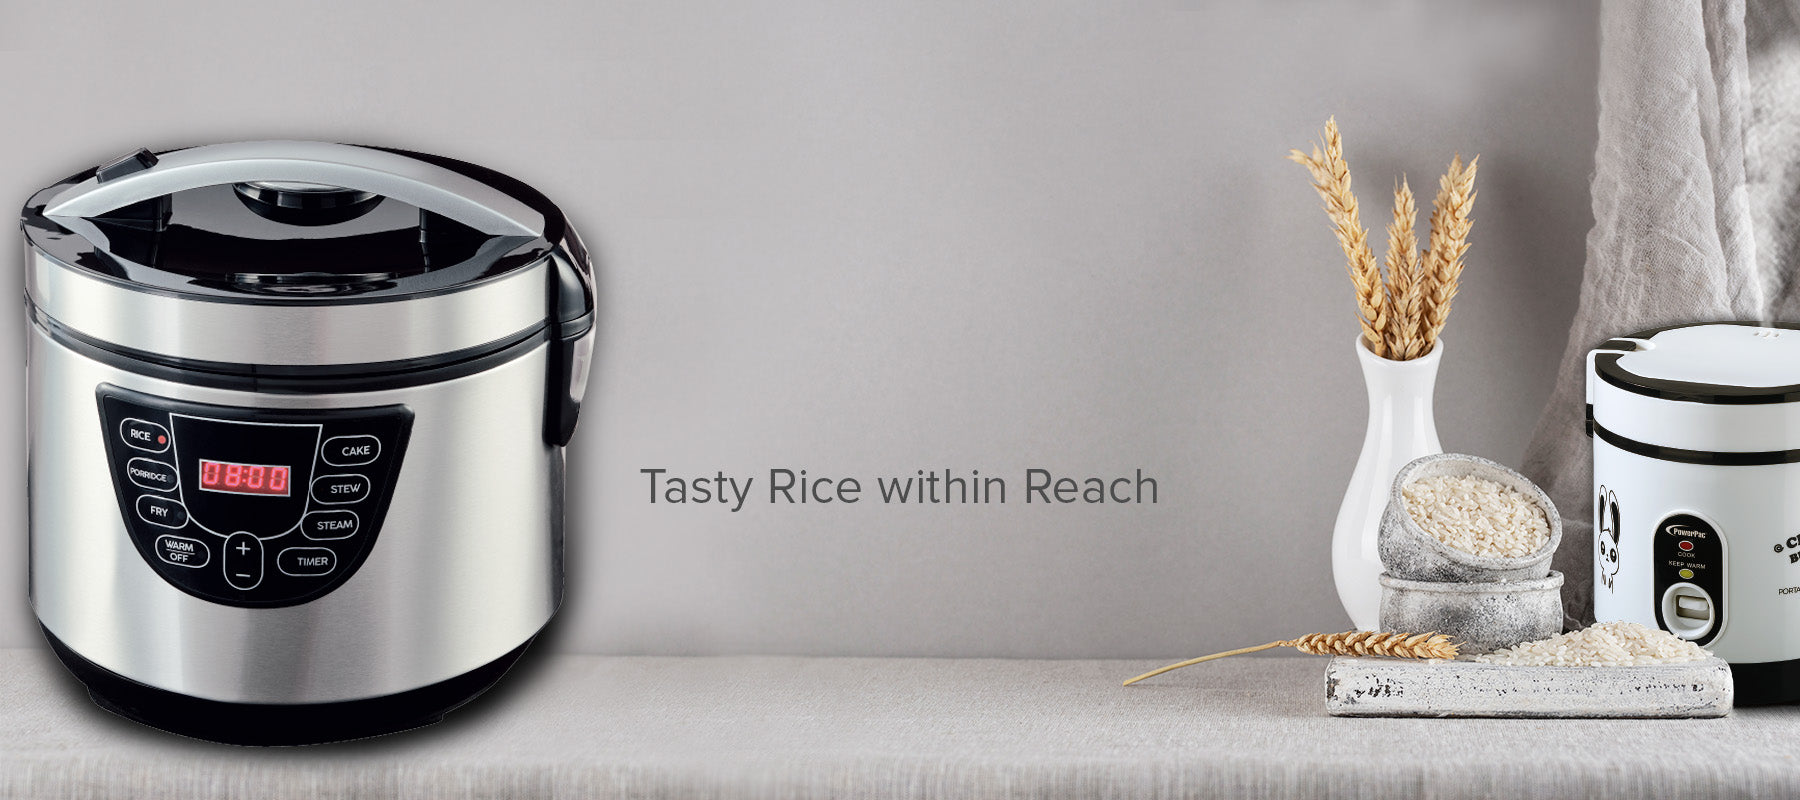 1.8L Rice Cooker with Porridge Function - Non-stick inner pot  (PPRC42-Nonstick)